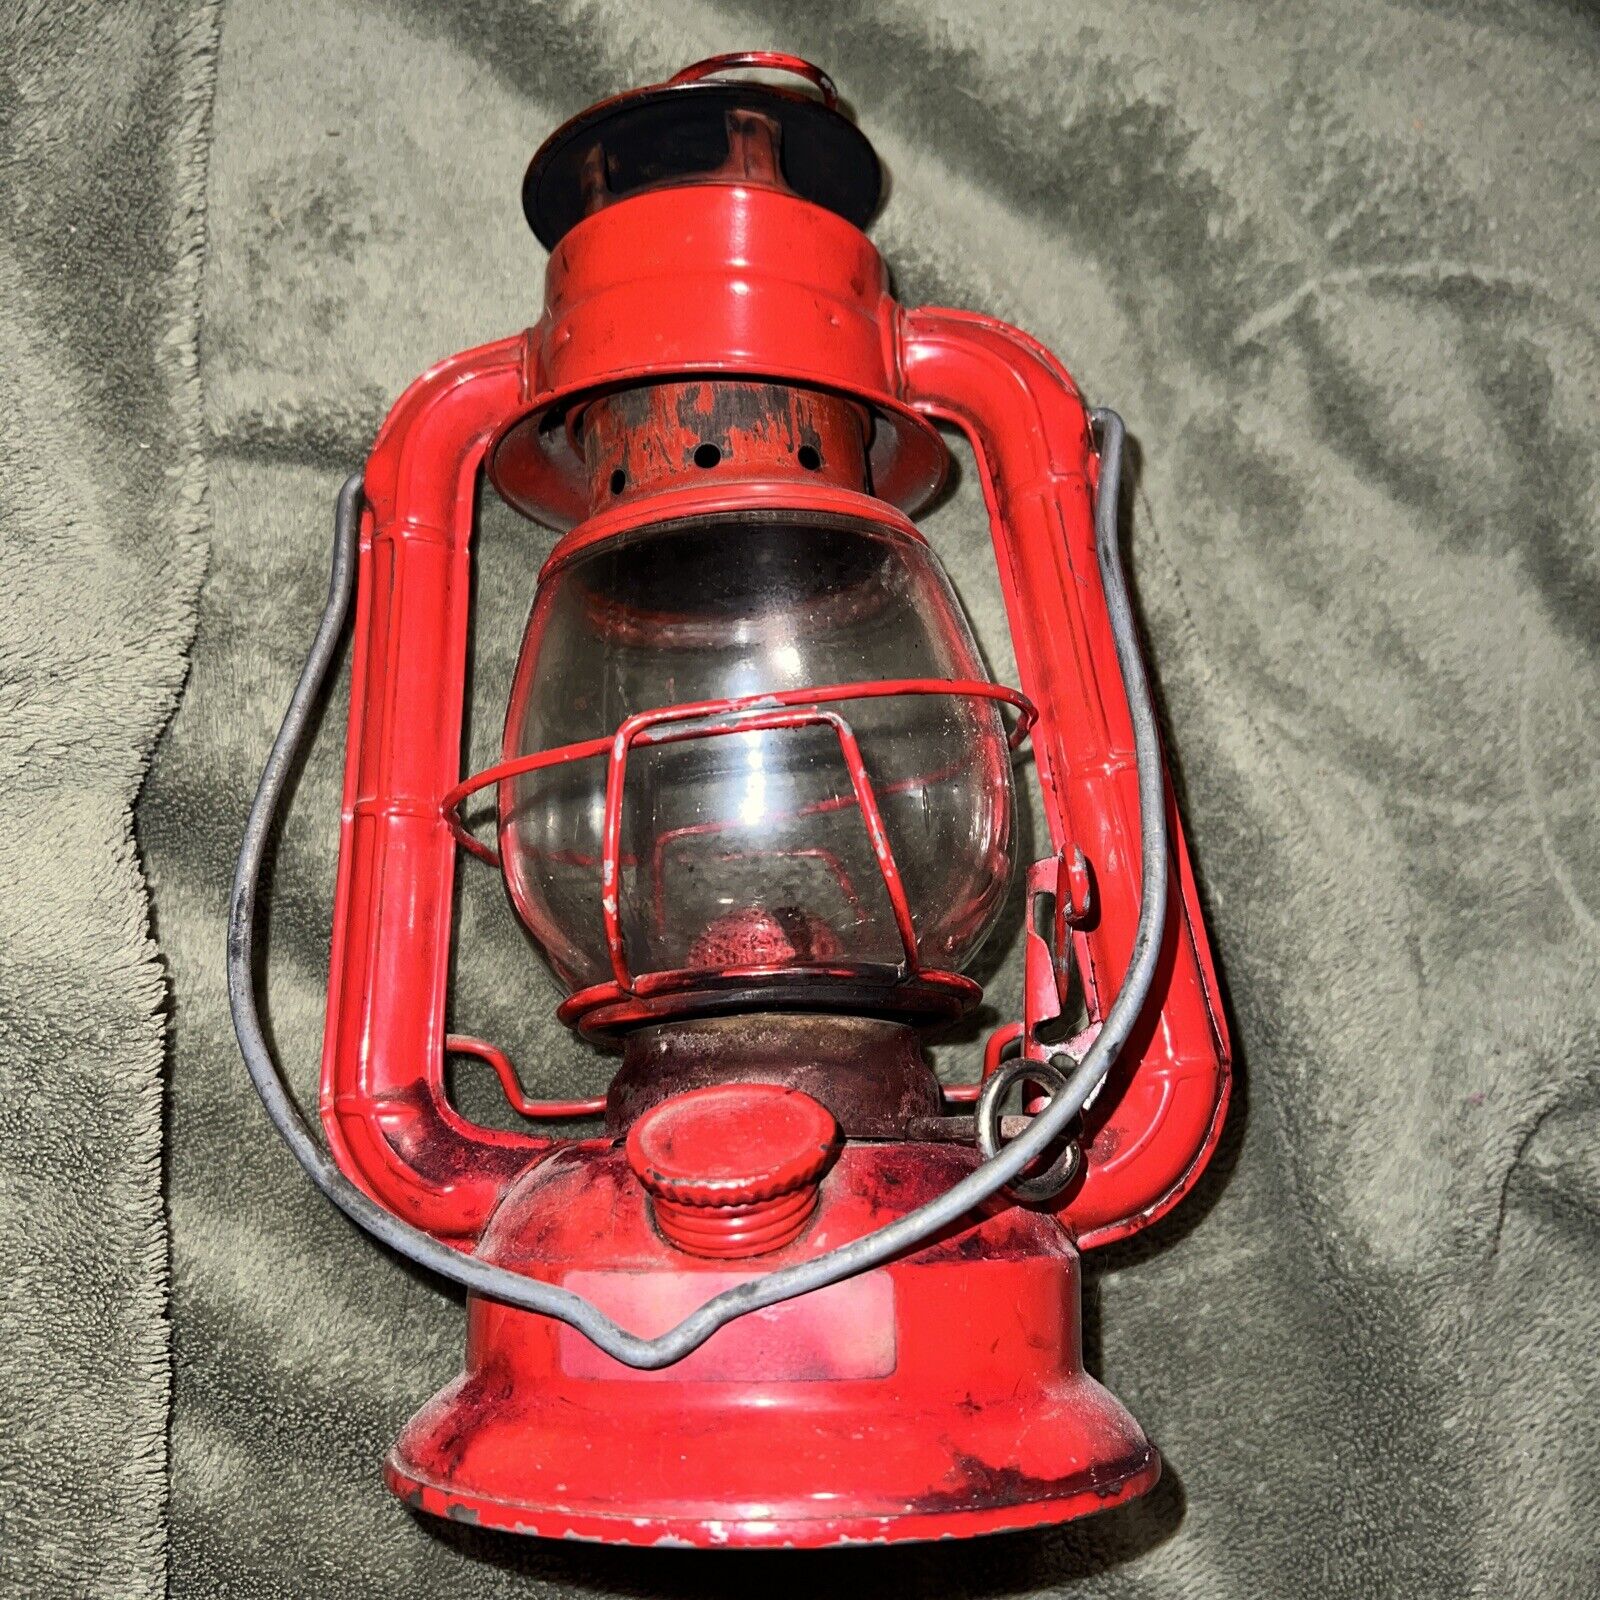 Dietz VINTAGE Chalwyn Tropic Red Lantern Made in England - WORKS